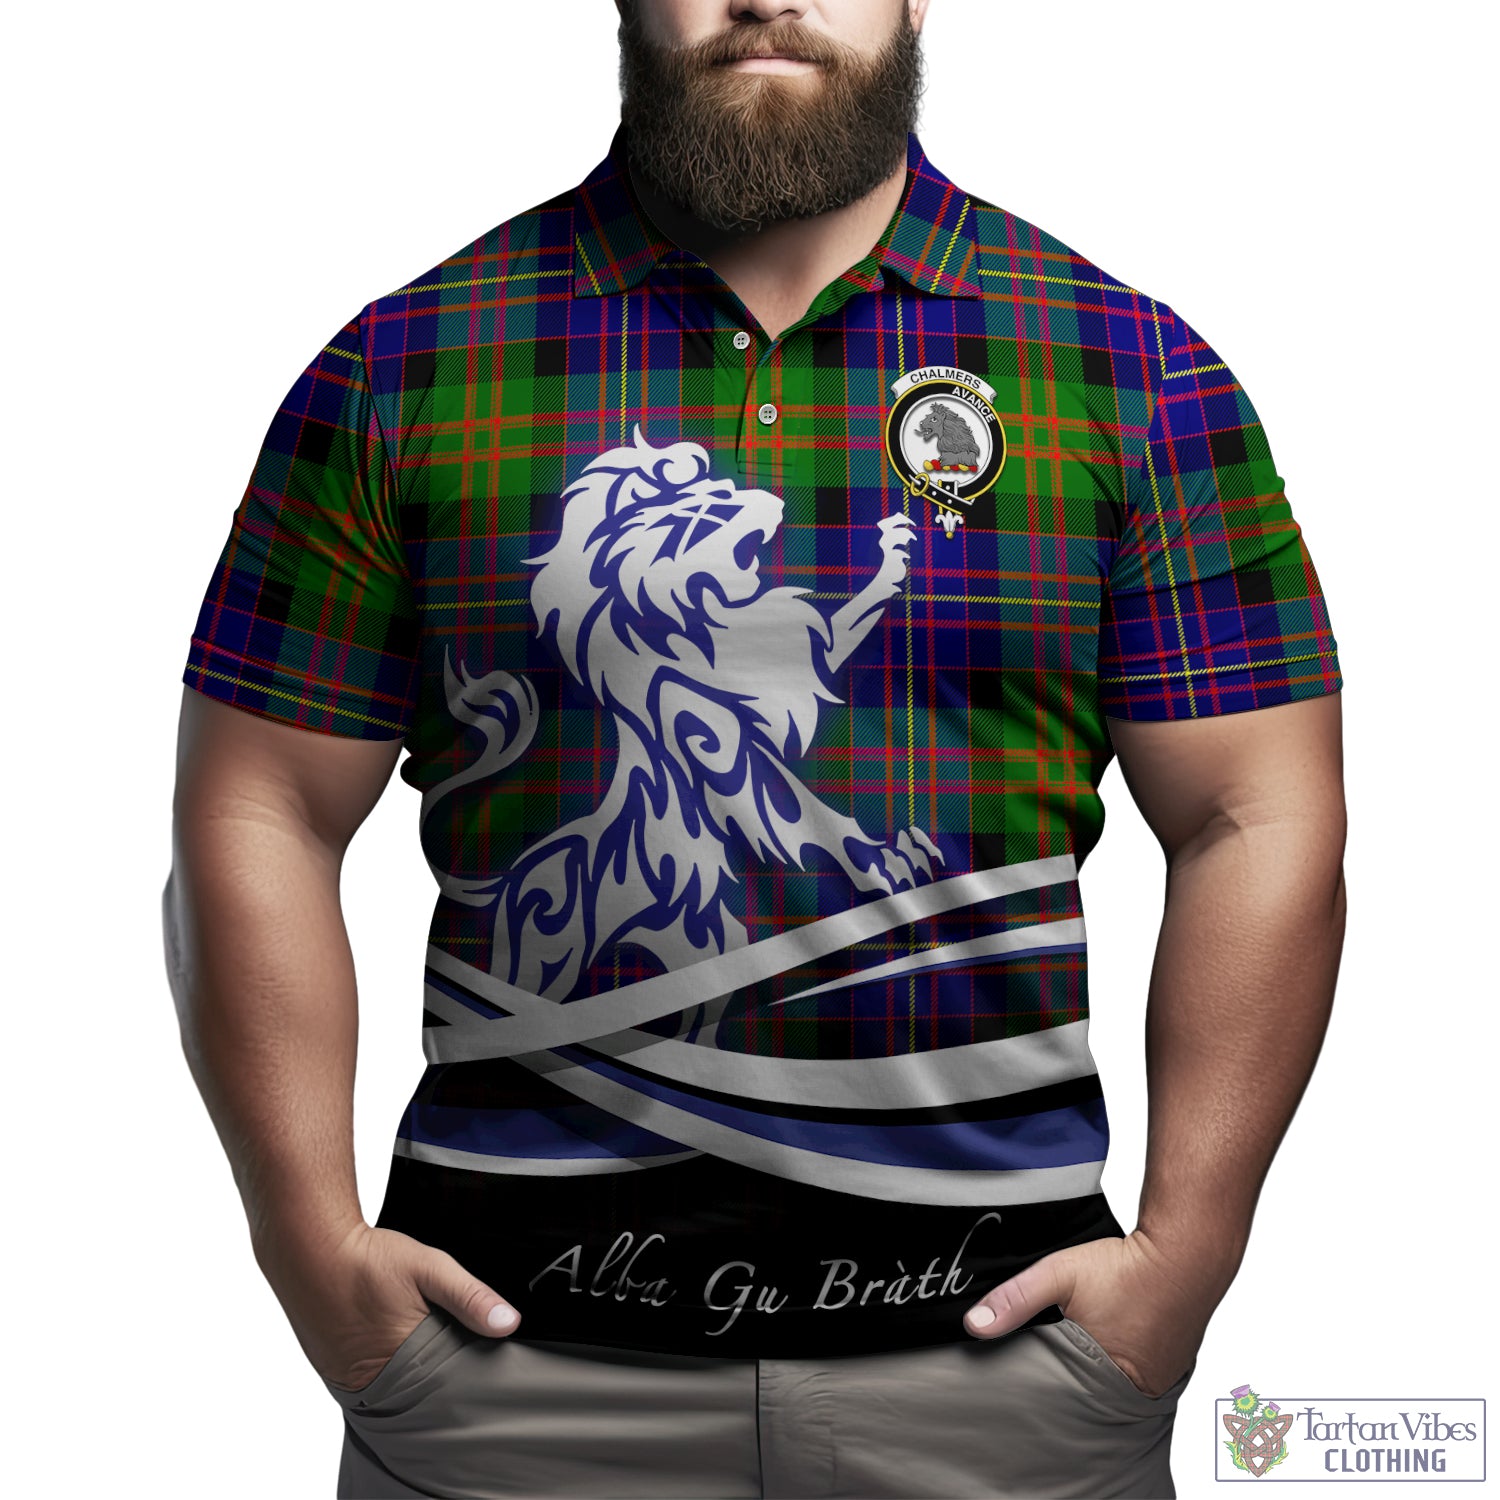 chalmers-modern-tartan-polo-shirt-with-alba-gu-brath-regal-lion-emblem